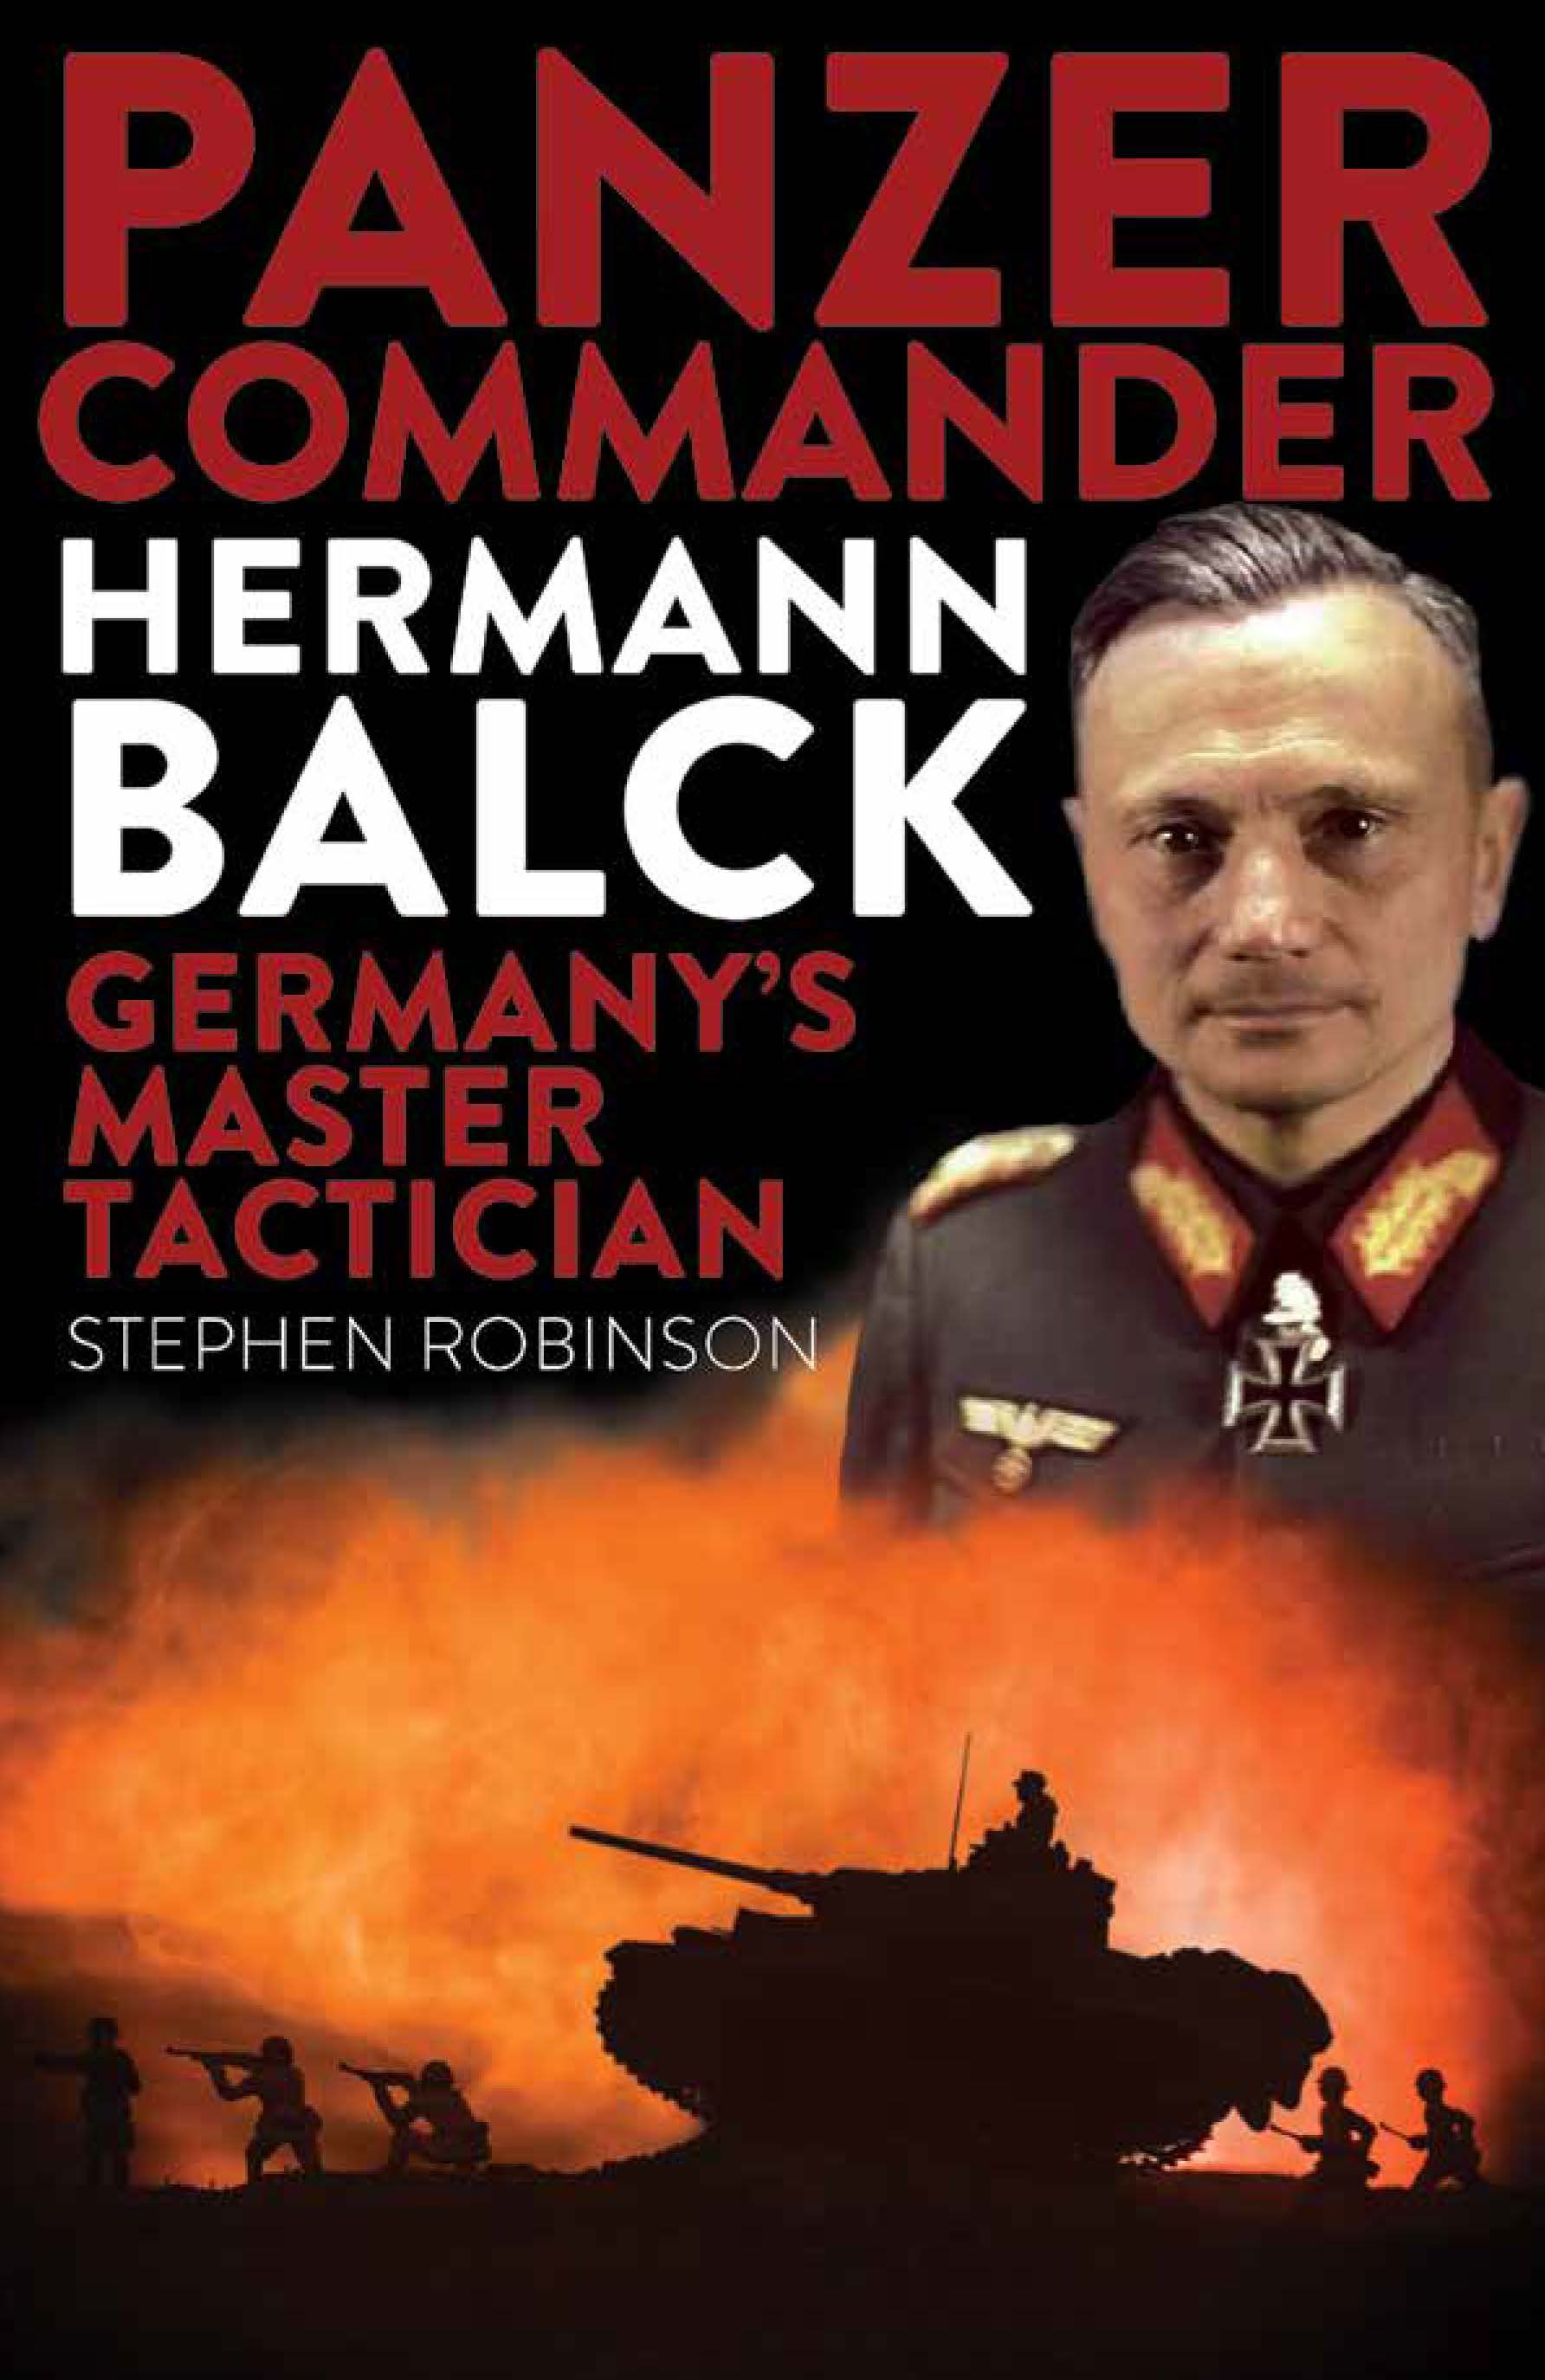 Panzer Commander Hermann Balck: Germany's master tactician